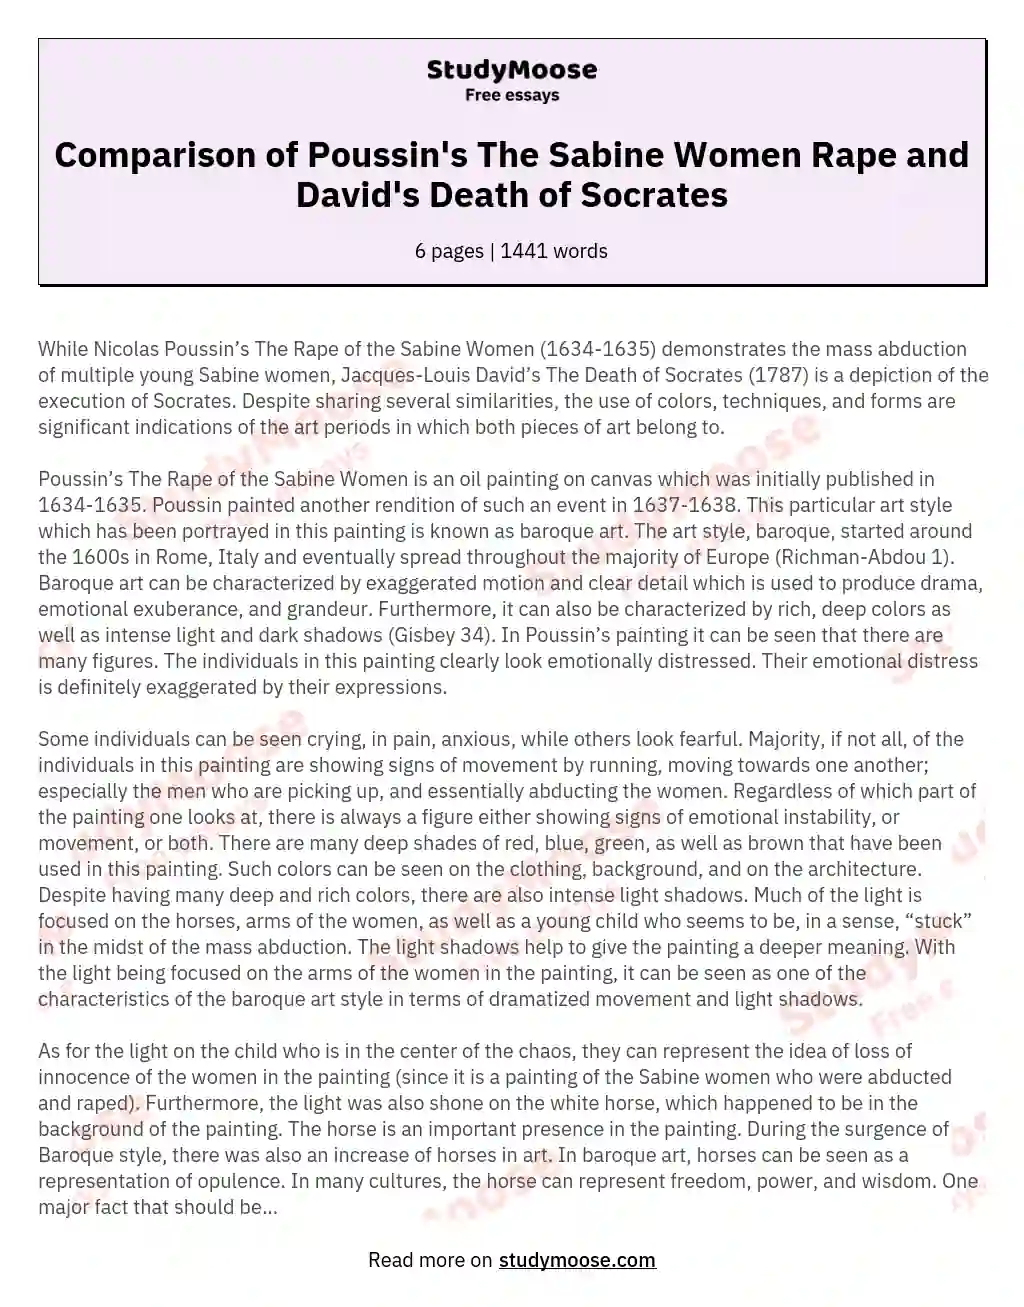 Comparison of Poussin's The Sabine Women Rape and David's Death of Socrates essay